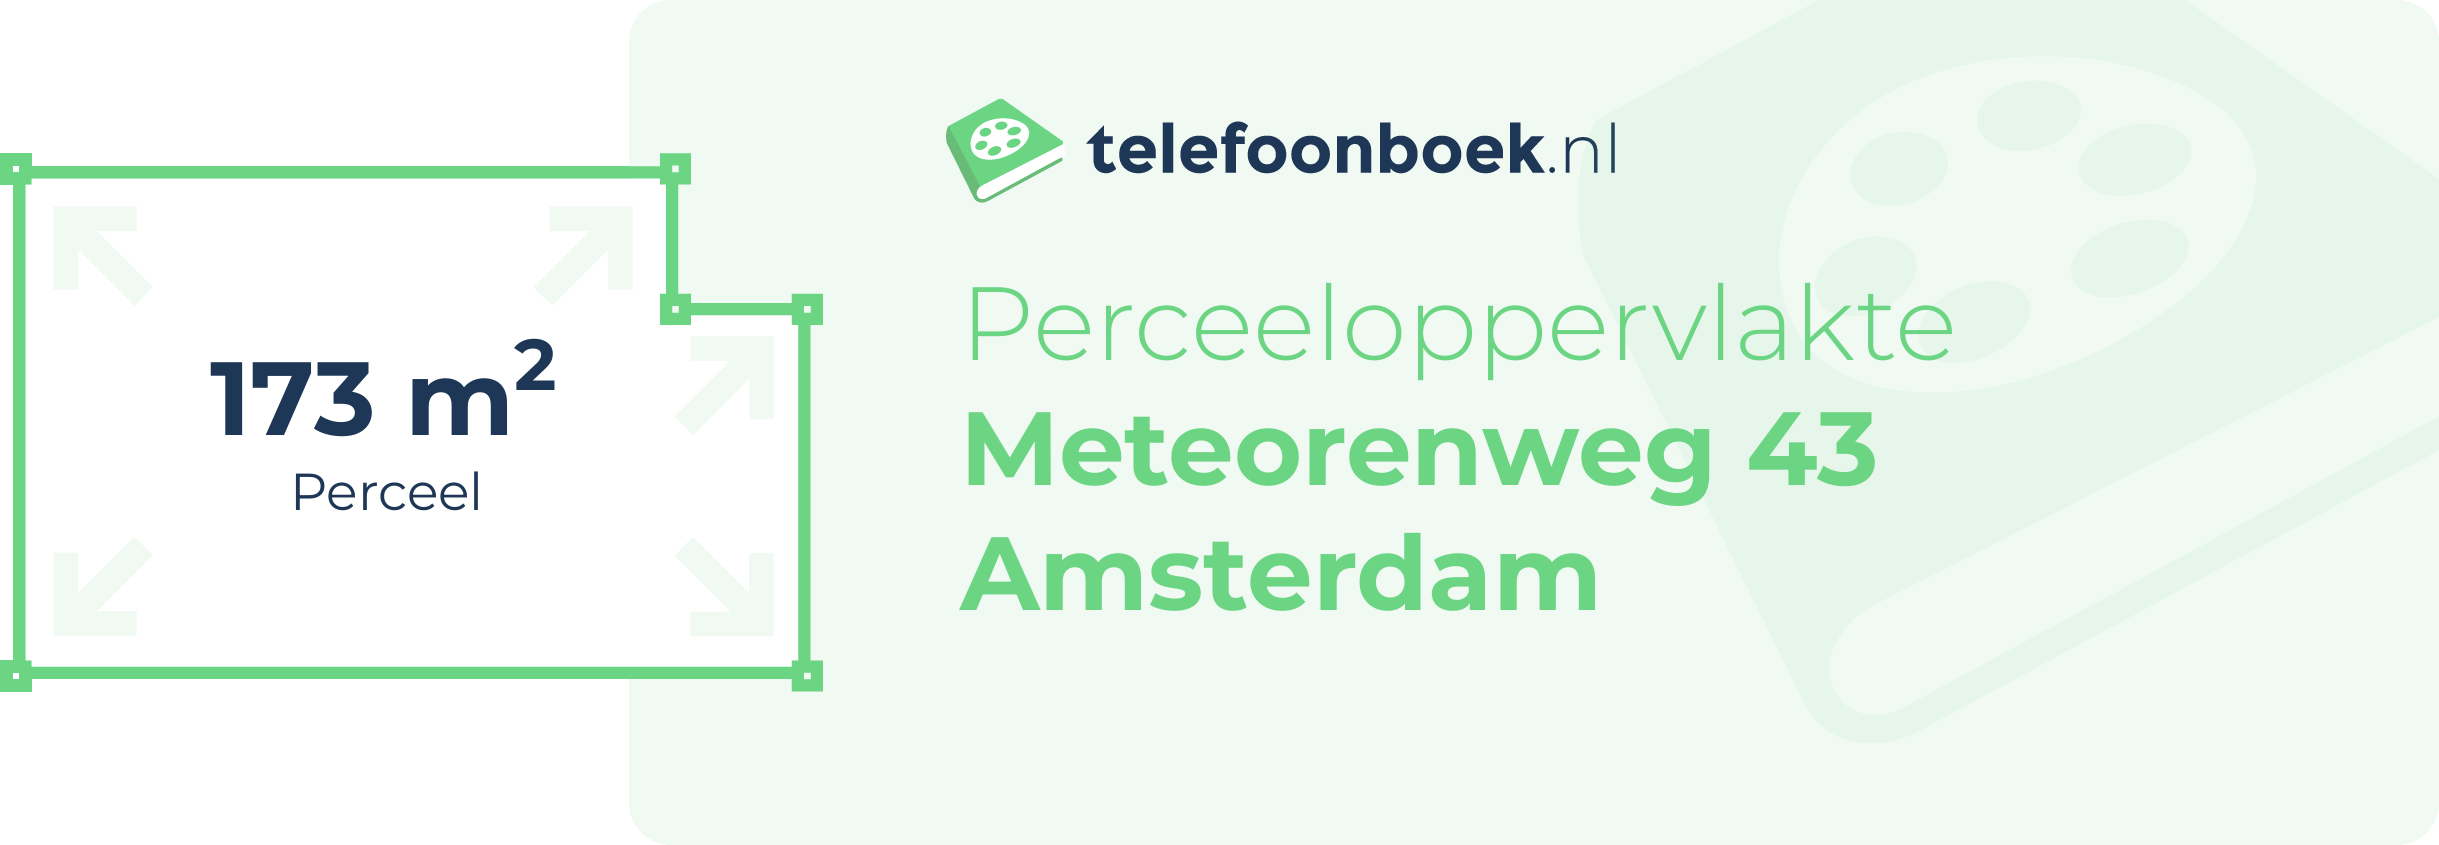 Perceeloppervlakte Meteorenweg 43 Amsterdam